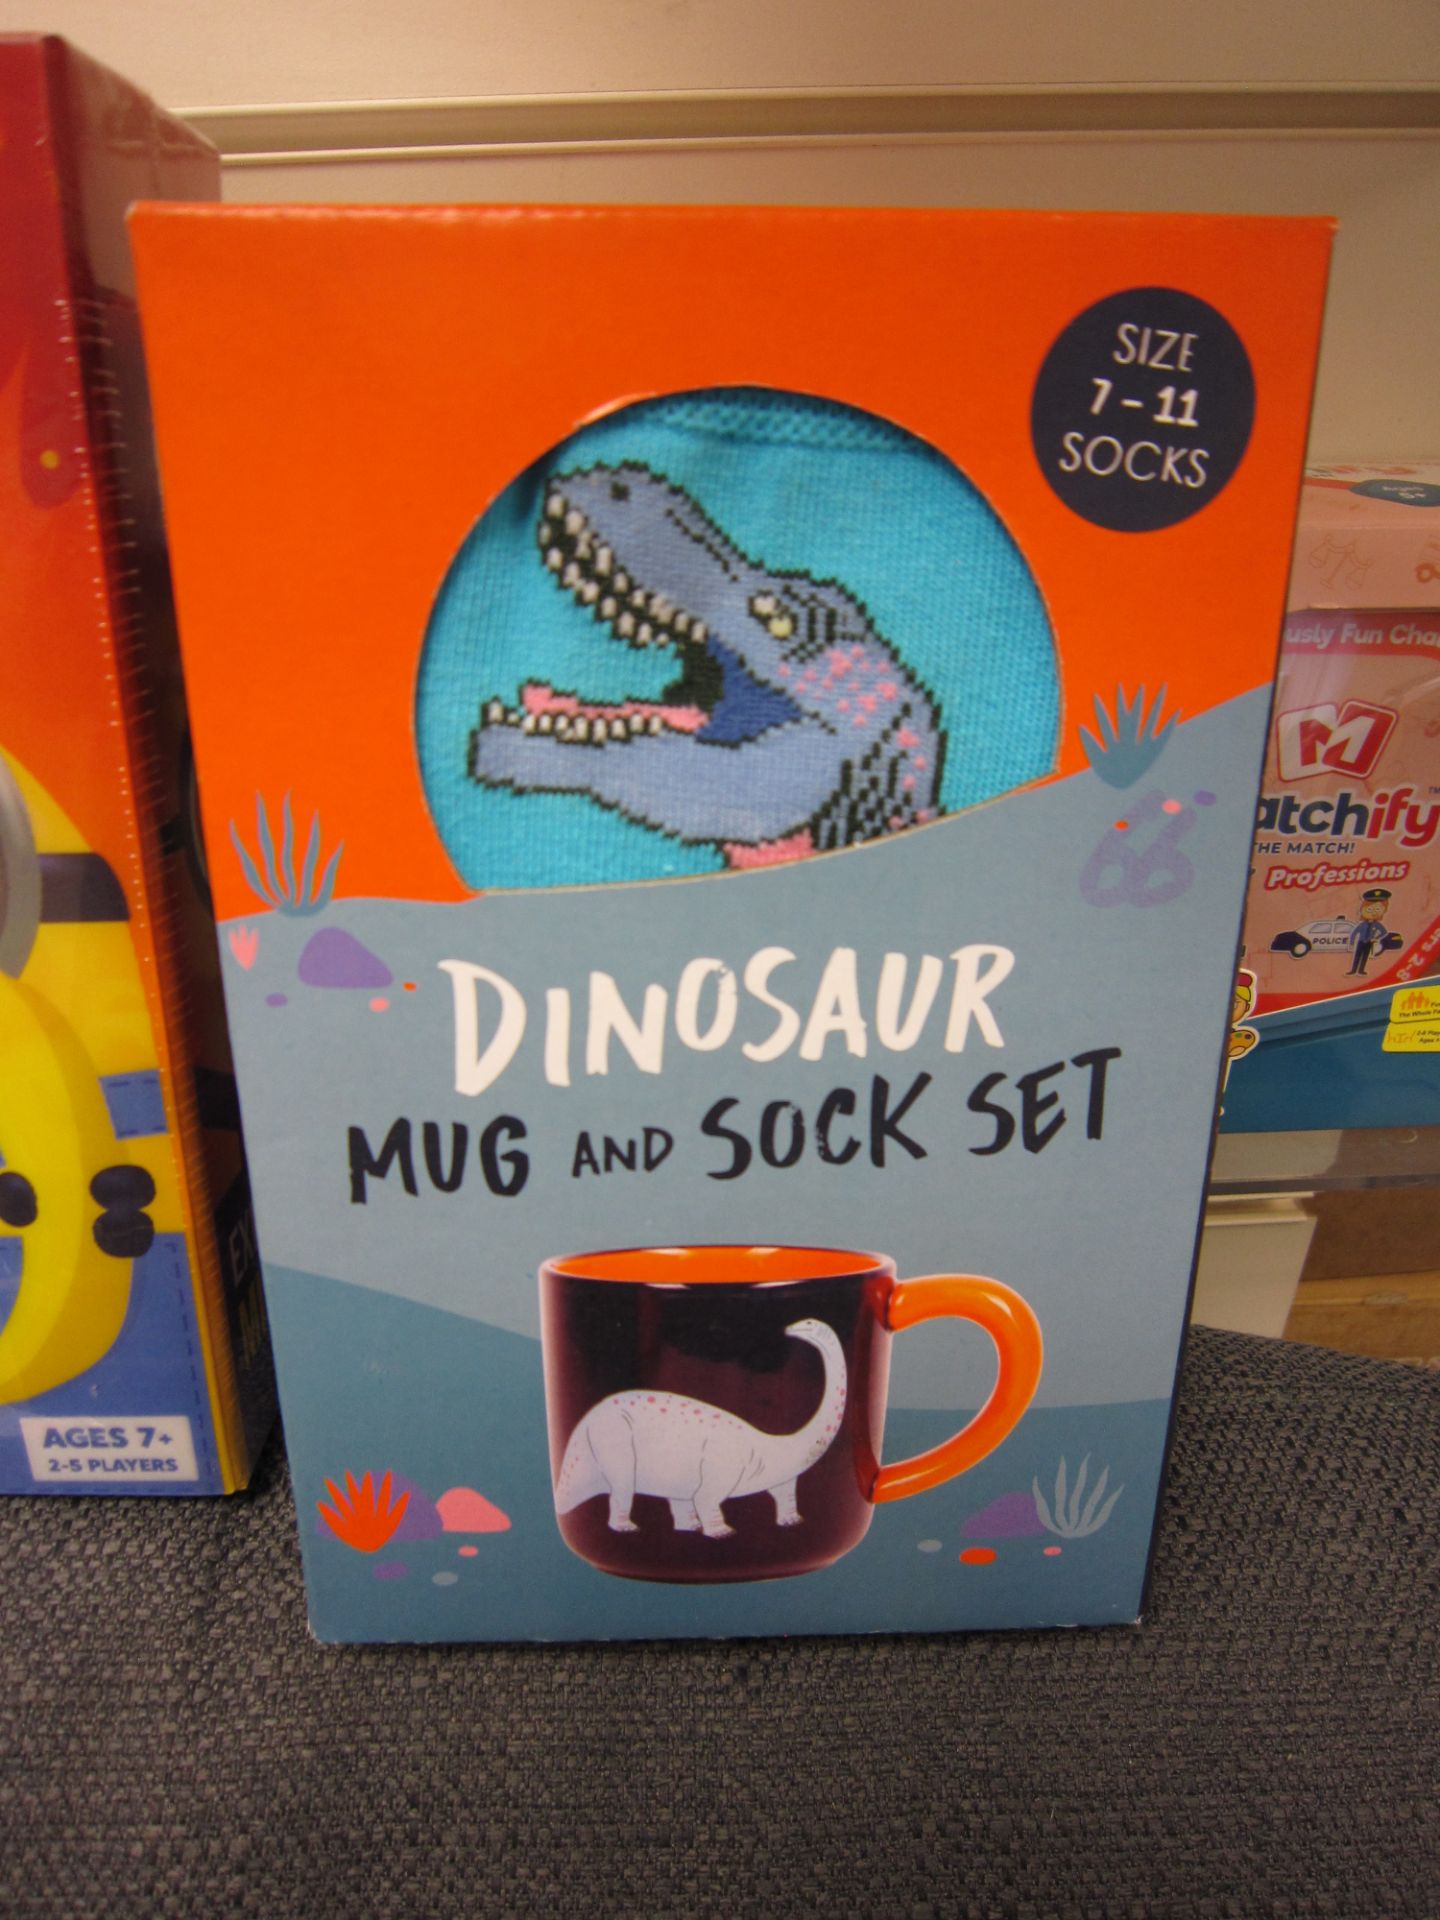 10 Pcs Dinousaur Sock (Adults) and Mug Set Brand New Sealed